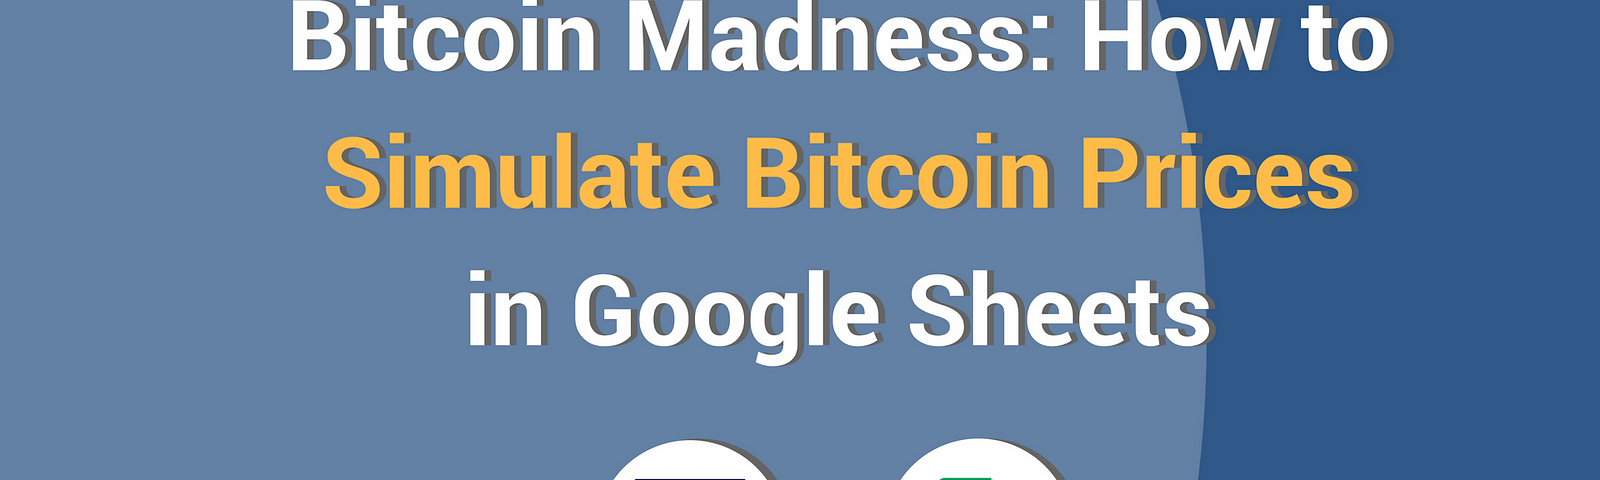 Bitcoin Madness